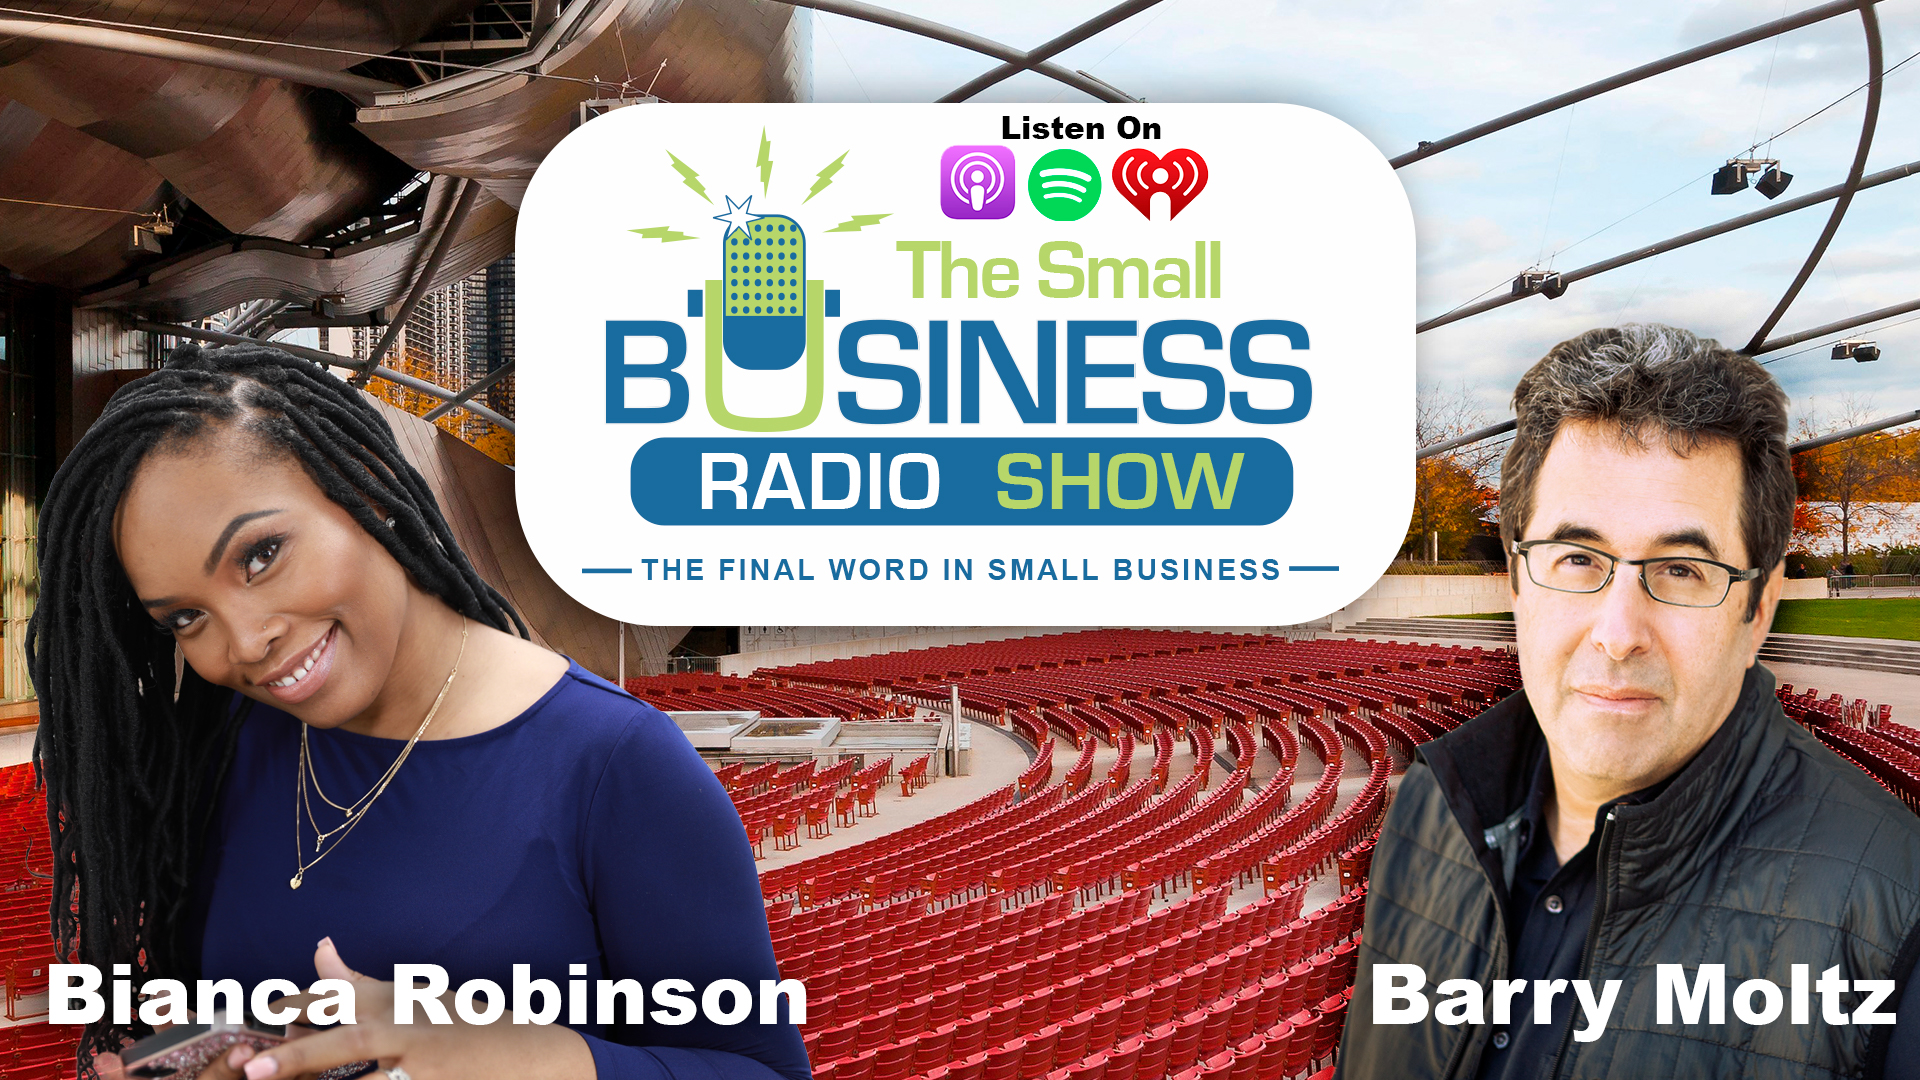 Bianca Robinson on The Small Business Radio Show